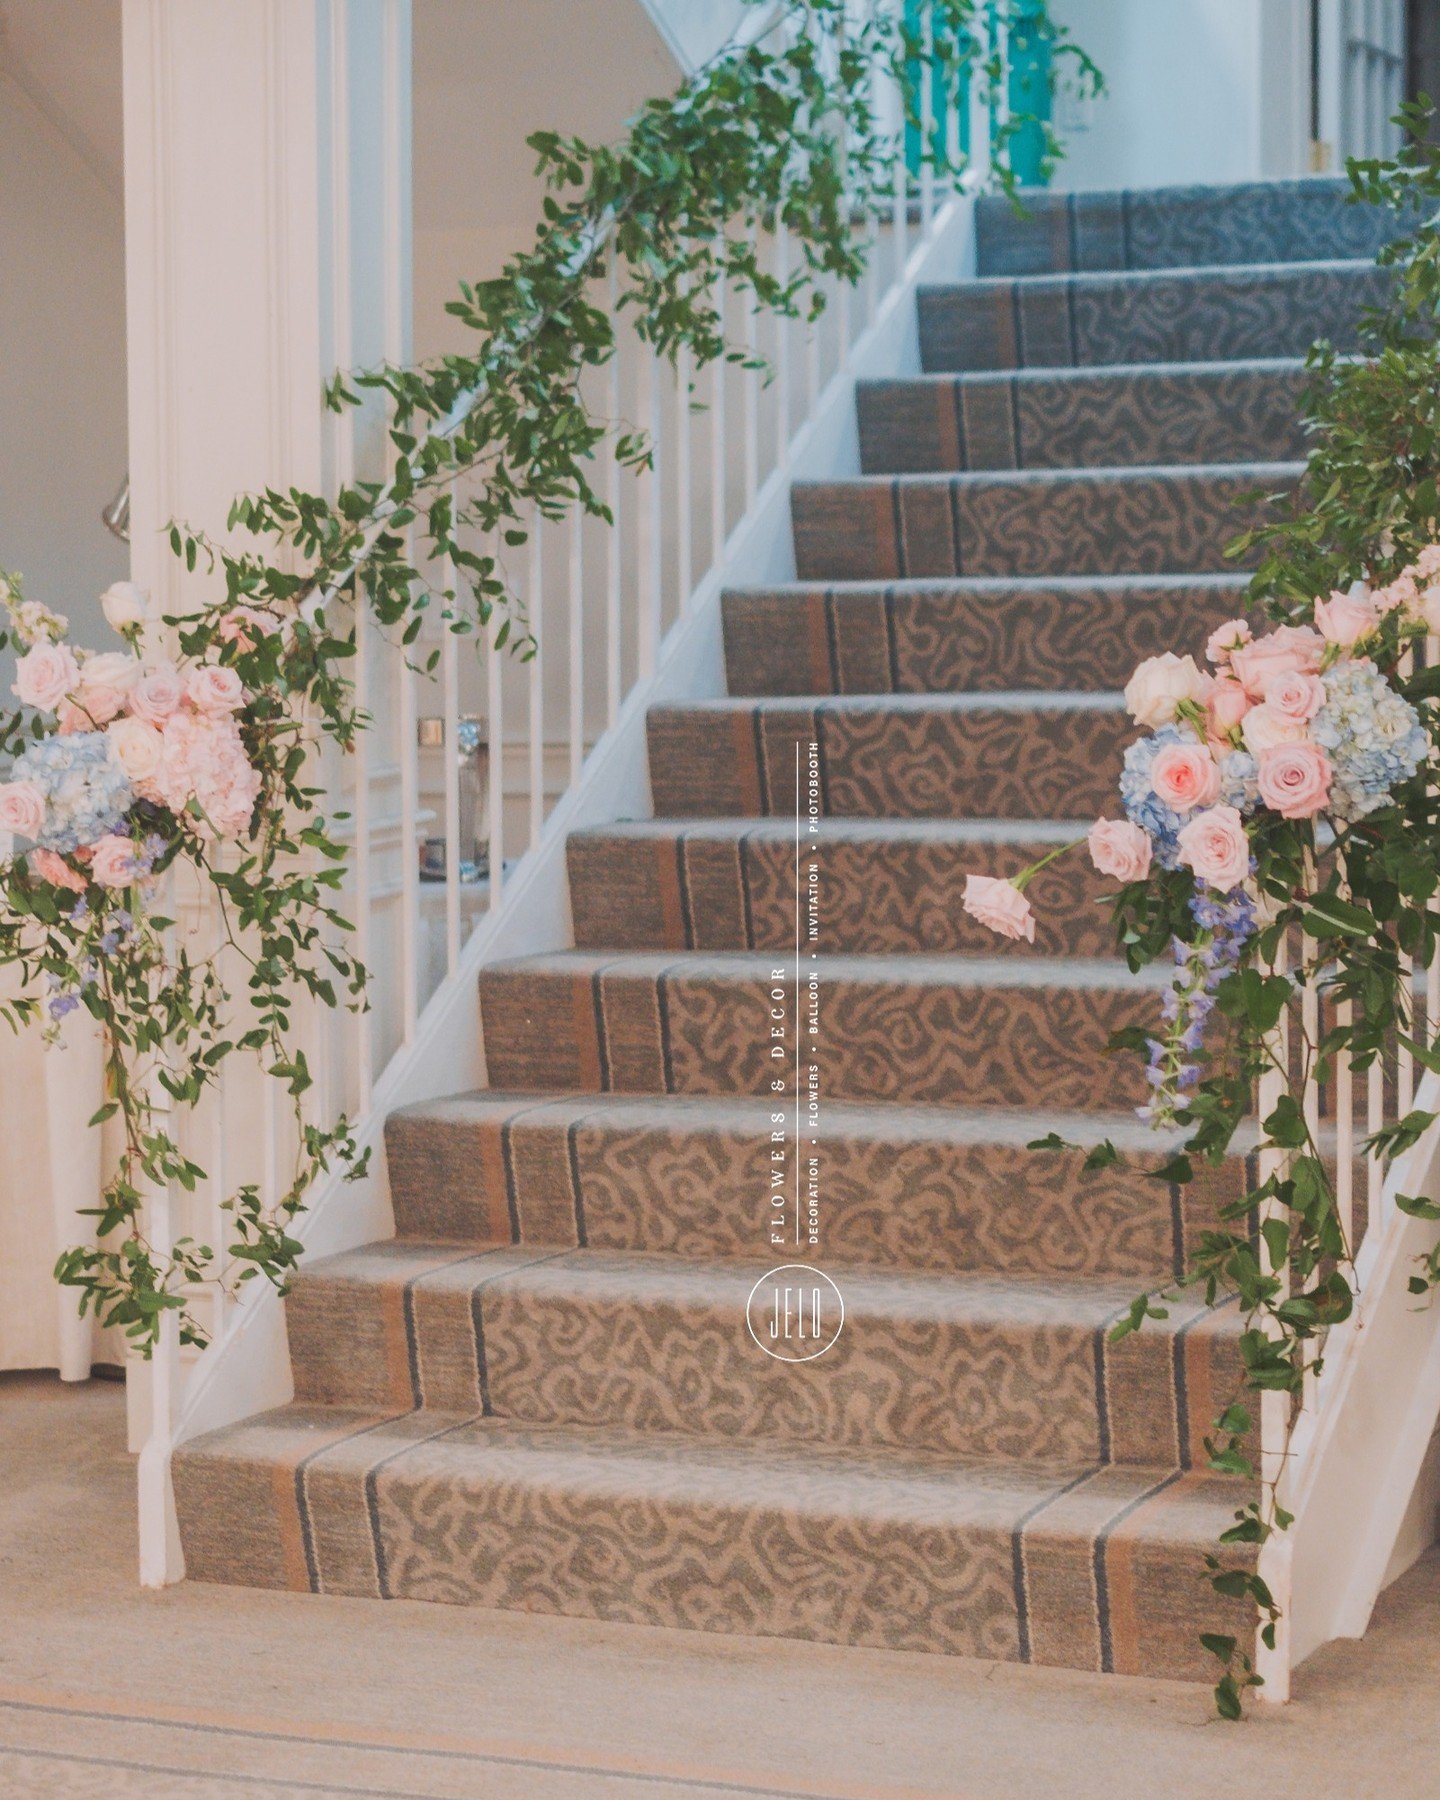 Stairway Decoration at @the_madison_hotel 

.
.
.

Event : Vivian + Eric's Wedding
Planning : @aisleaiweddings
Flowers &amp; Decor : @jeloflowersdecor
Venue : @the_madison_hotel